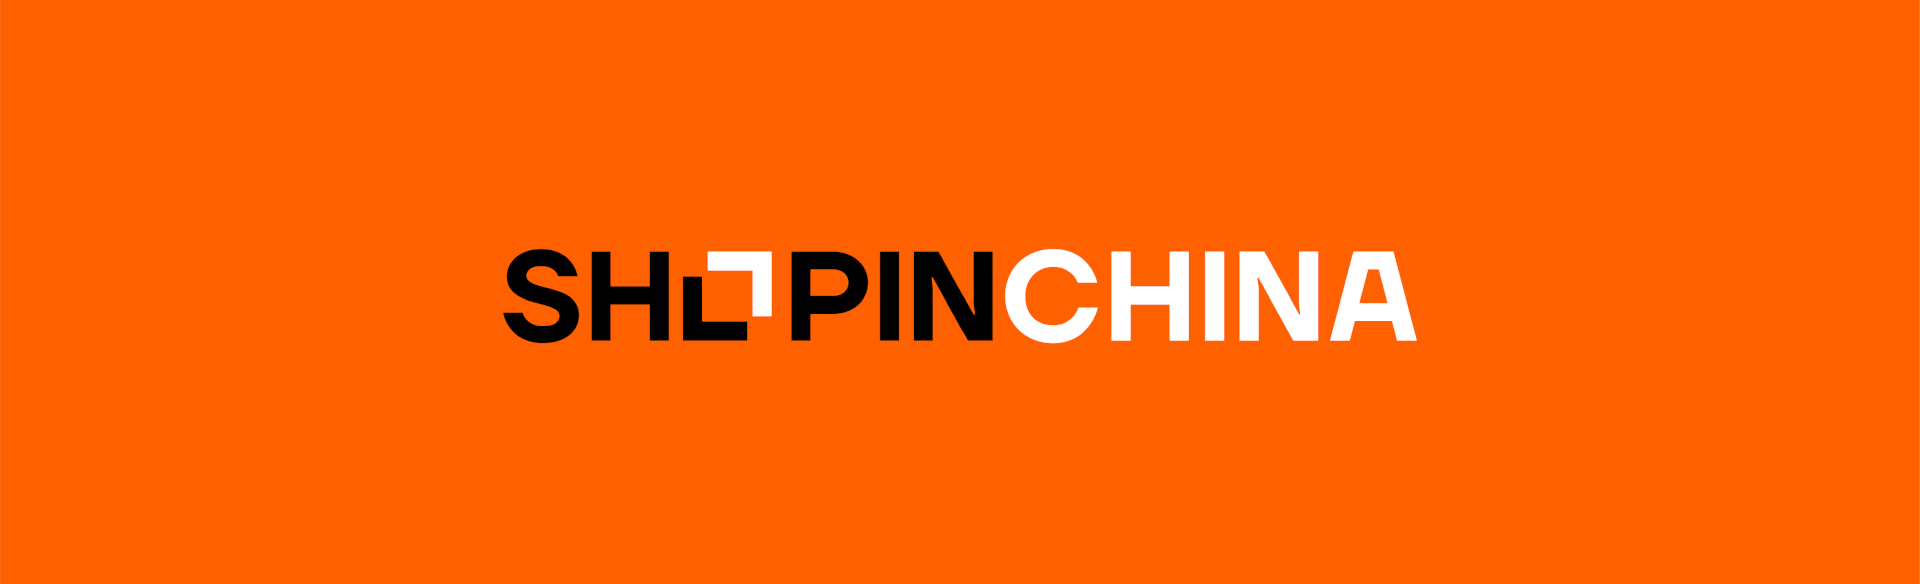 shopinchina-branding-logo